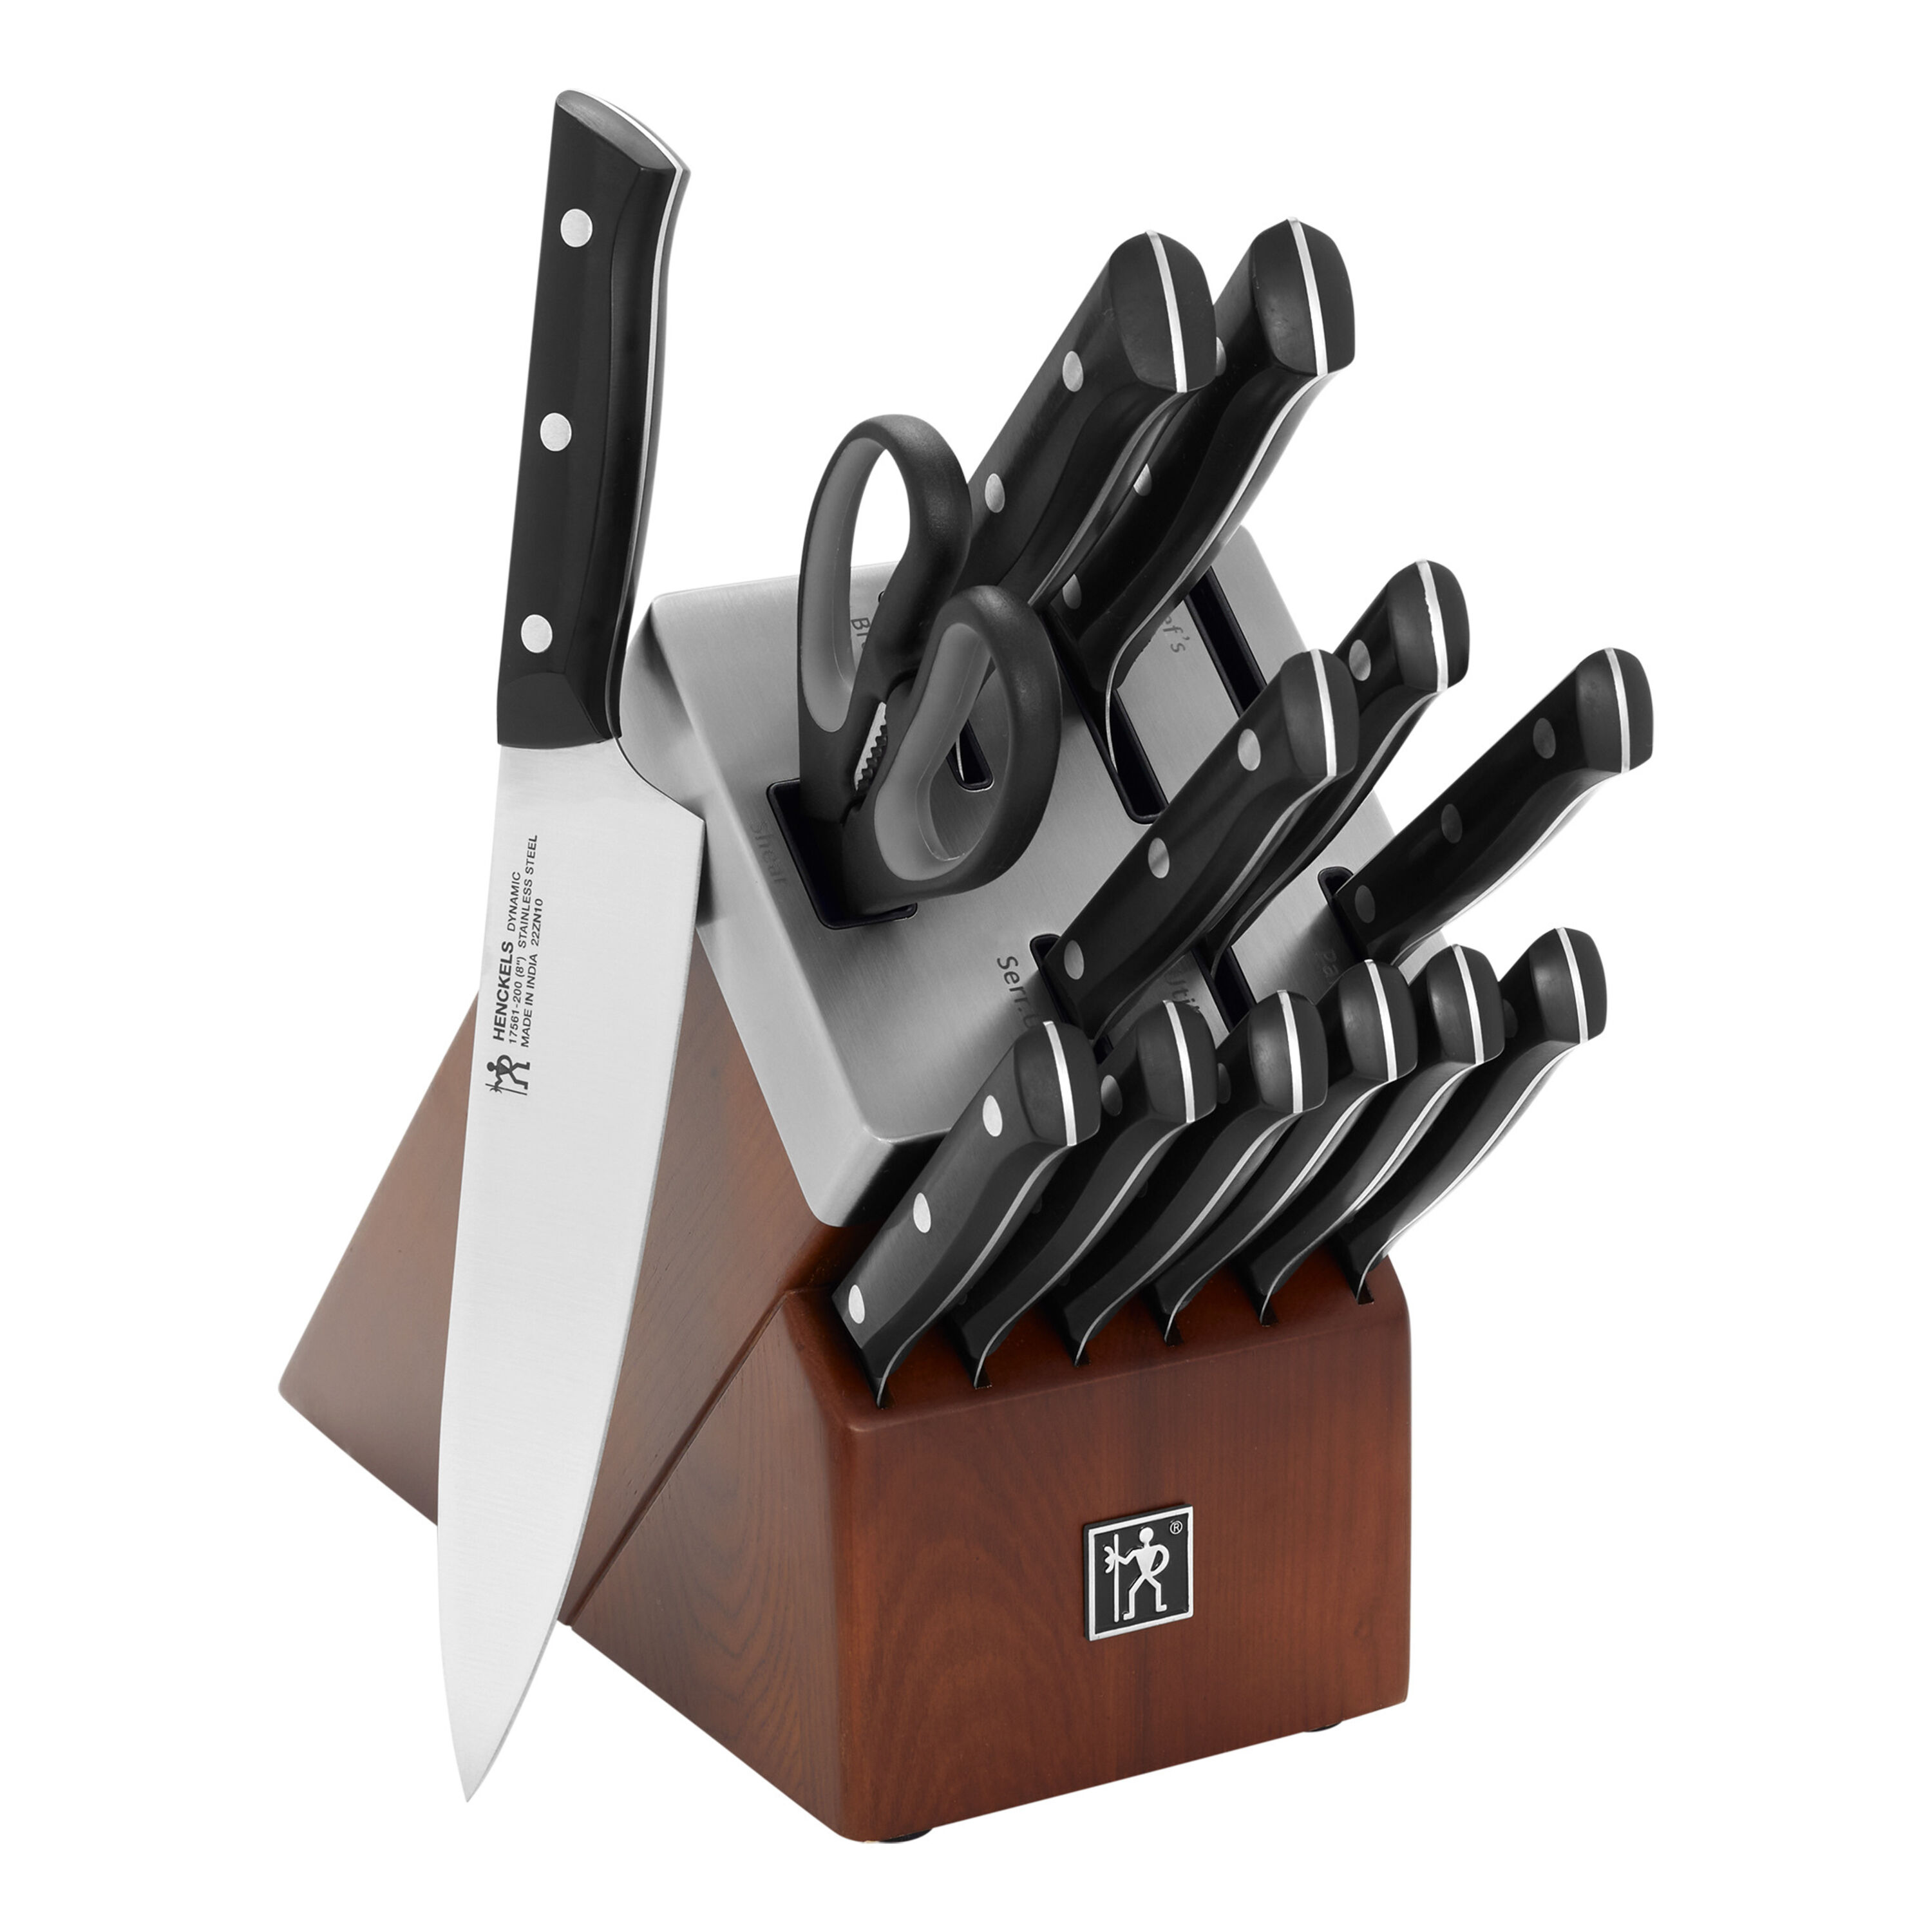 13-piece Pro Self-Sharpening Knife Block Set in Black